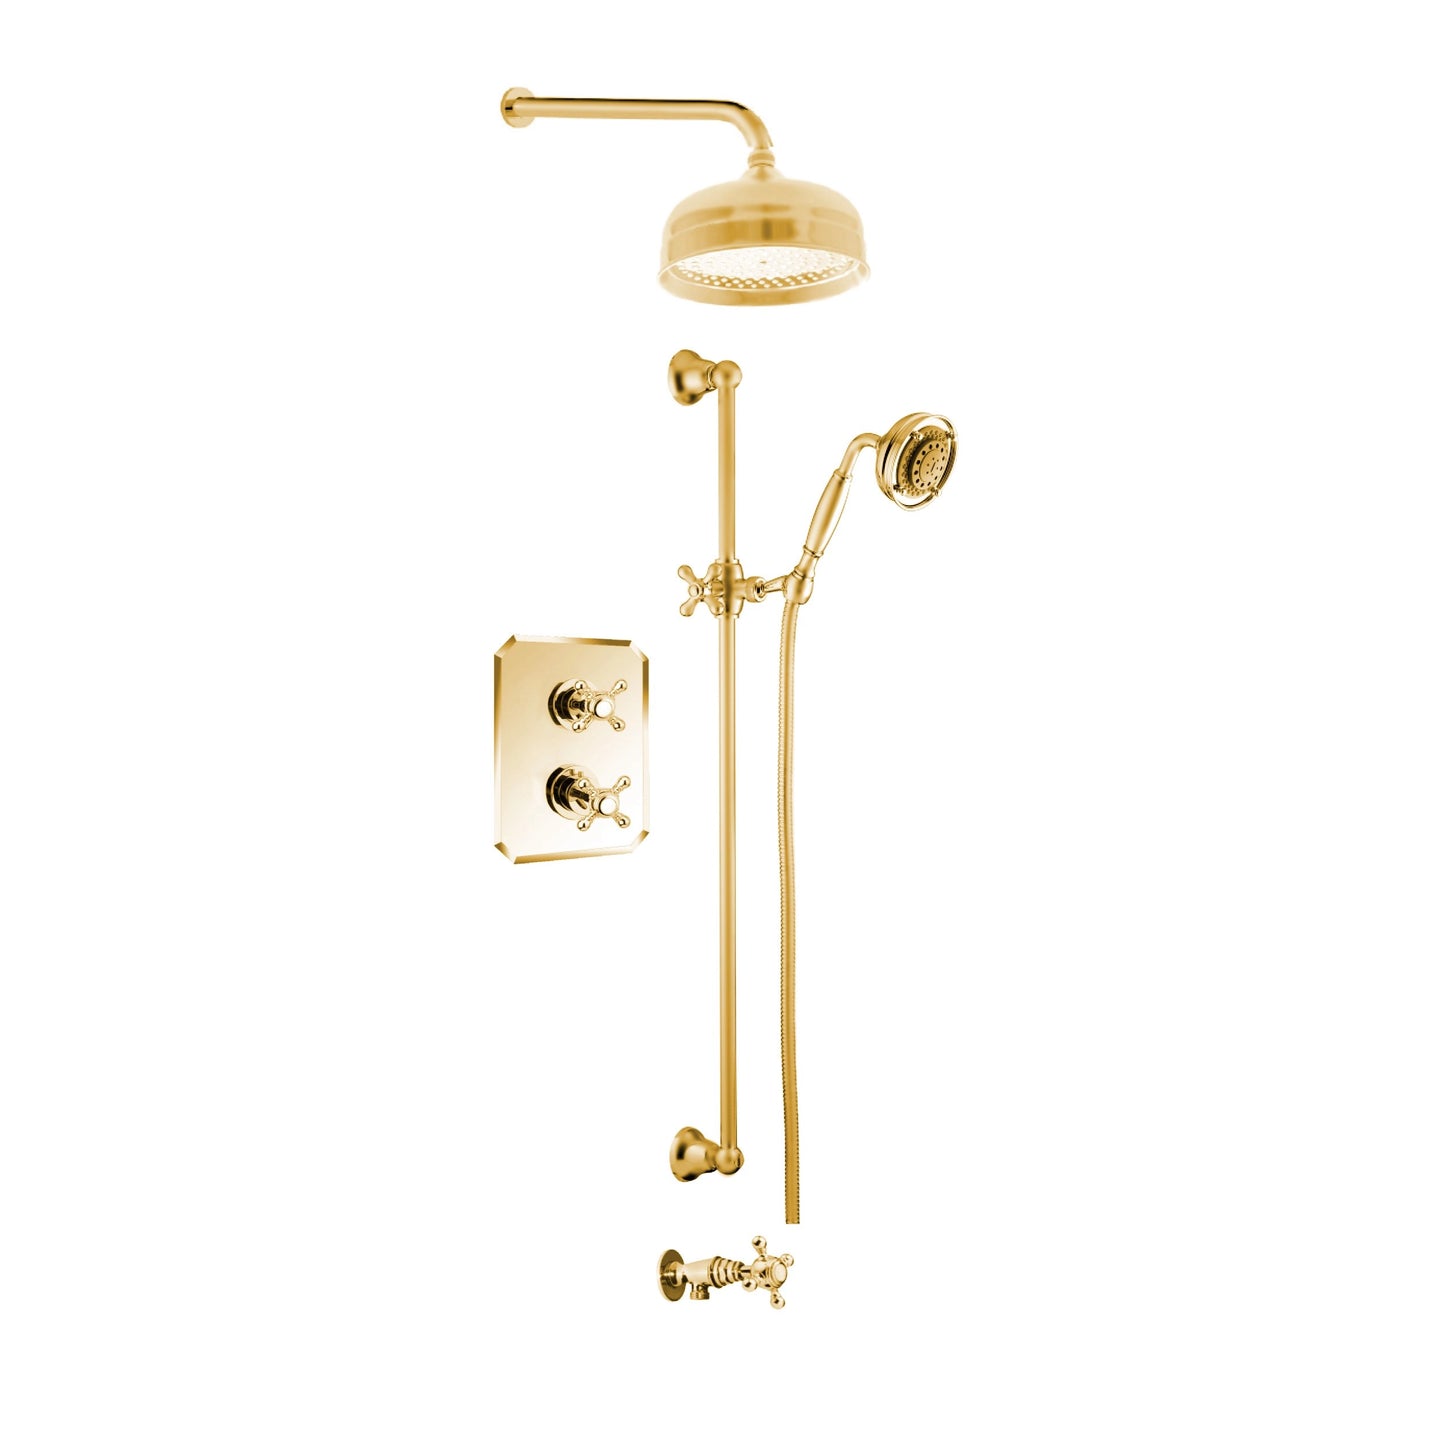 Aquadesign Products Shower Kit (Julia 37JX) - Brushed Gold